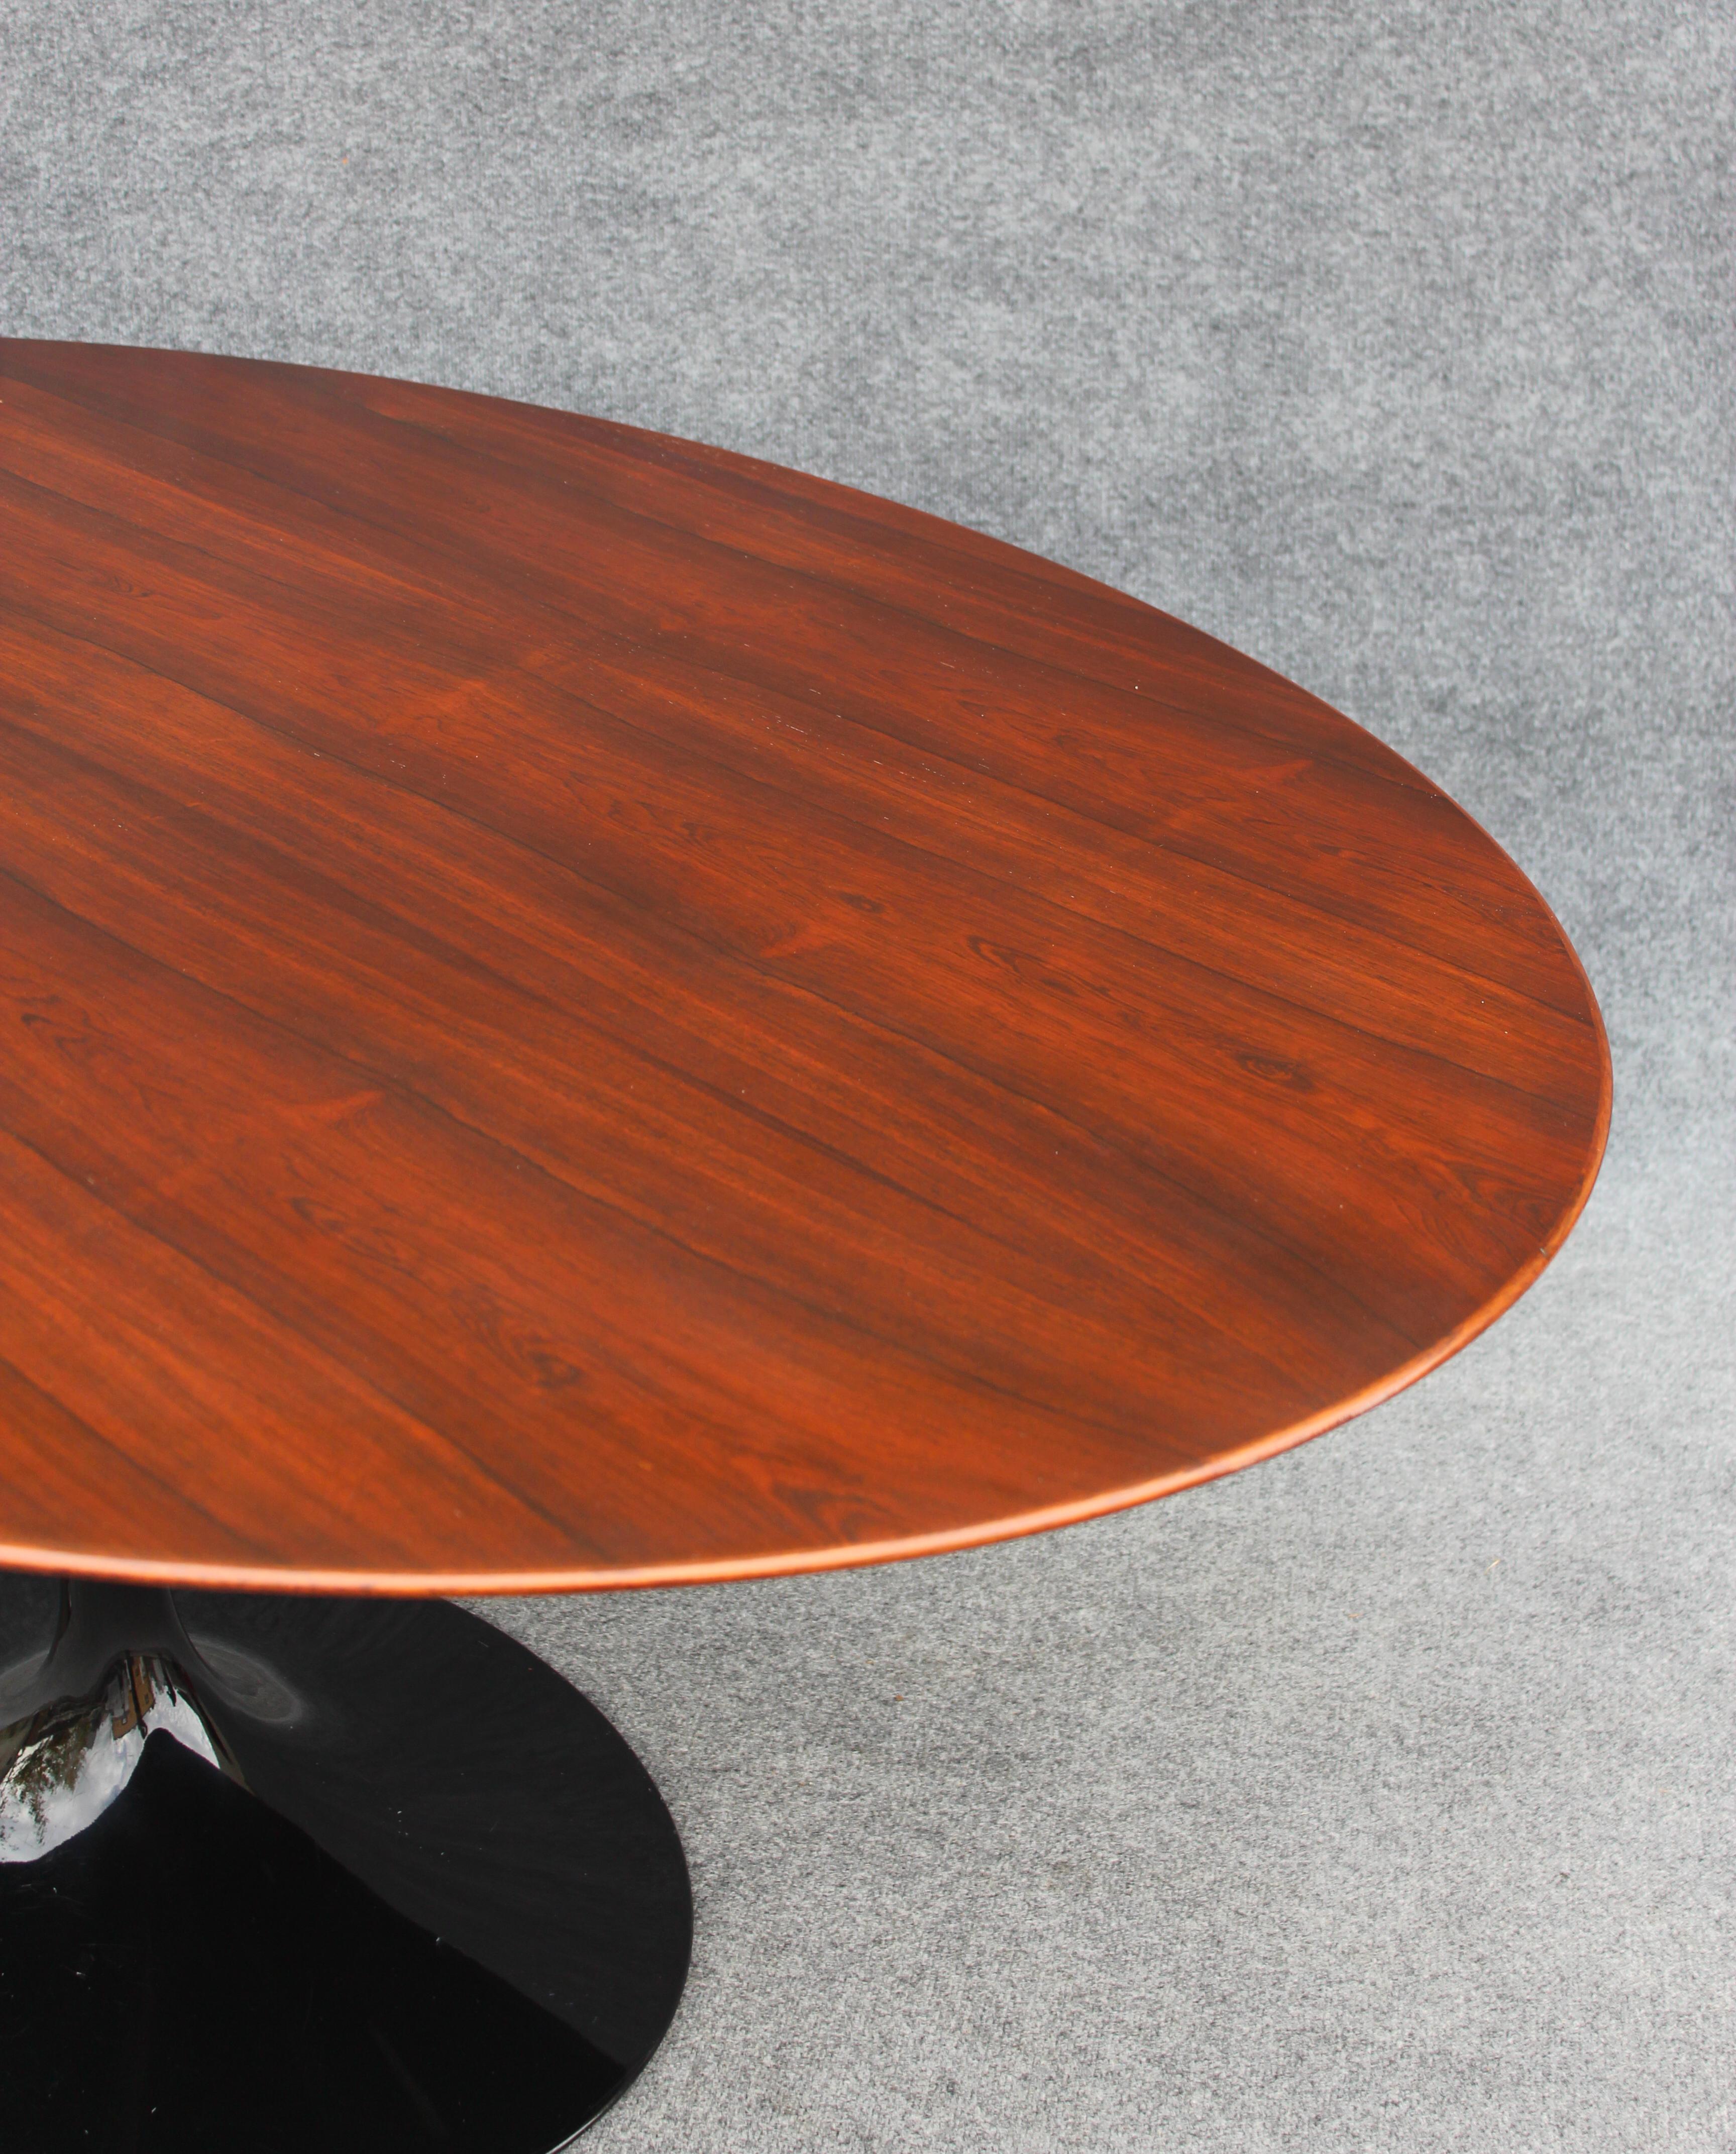 Professionally Restored Eero Saarinen for Knoll Rare Rosewood Tulip Dining Table 1